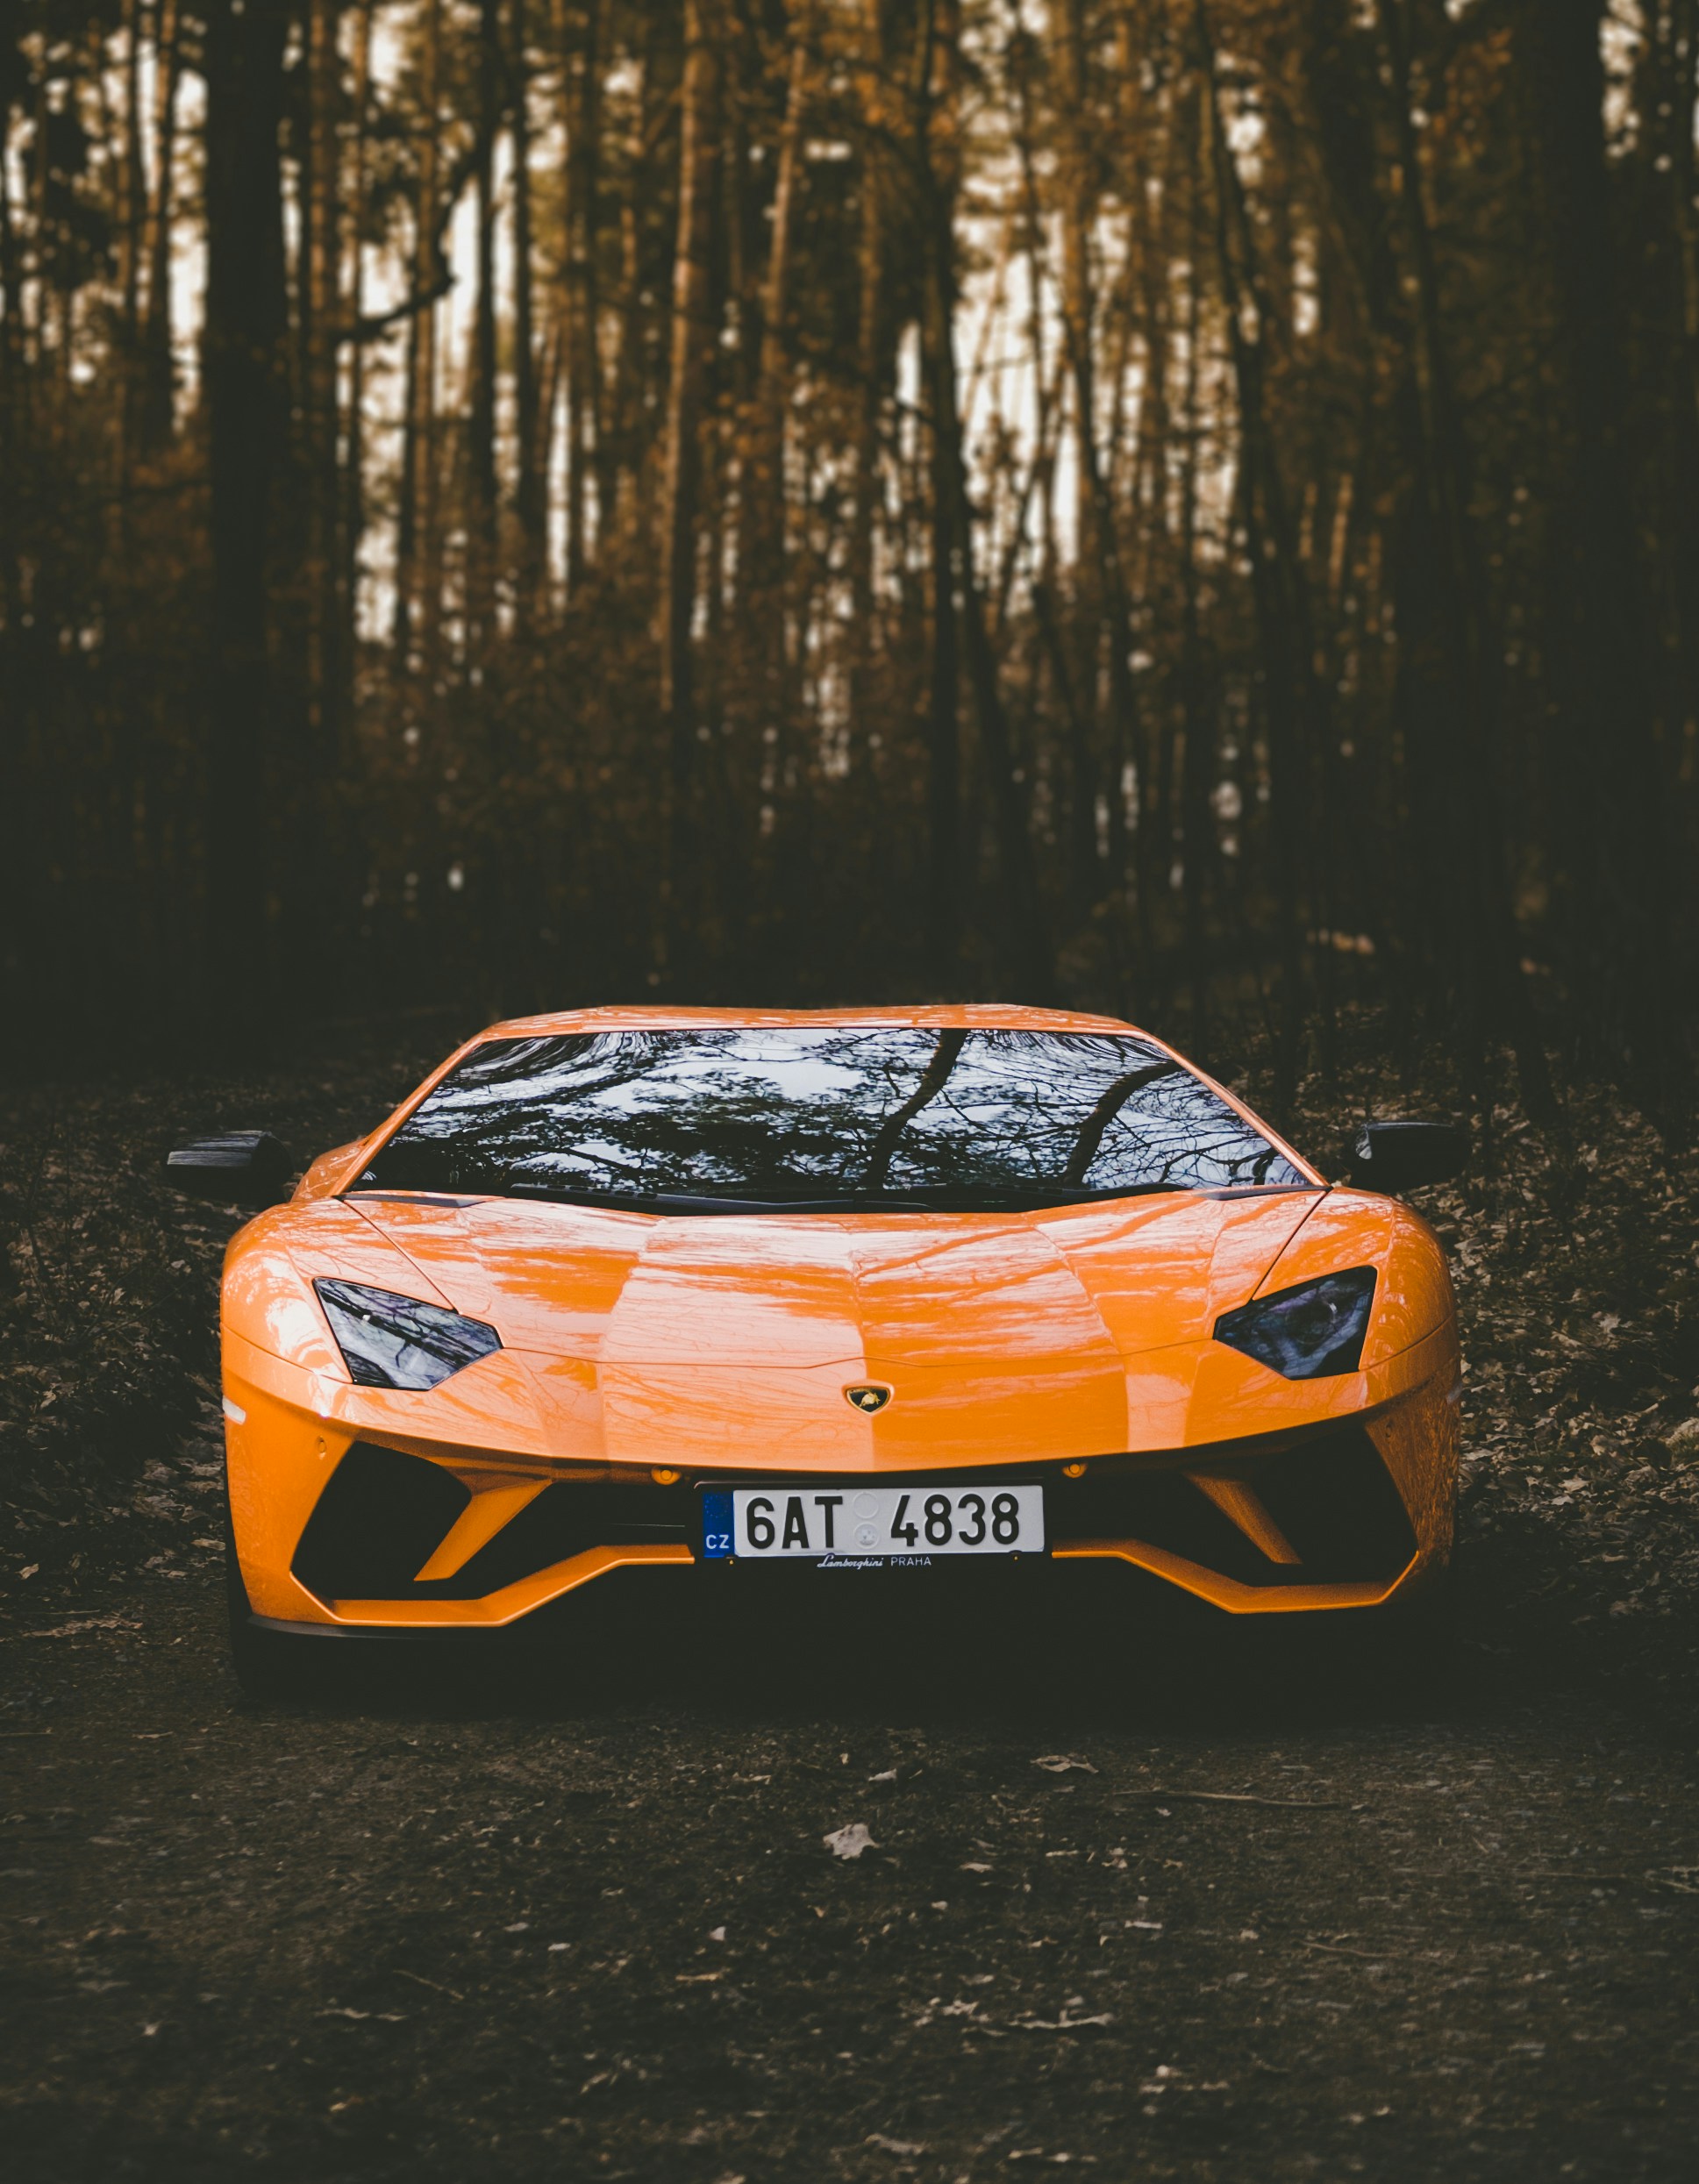 Image of a orange car